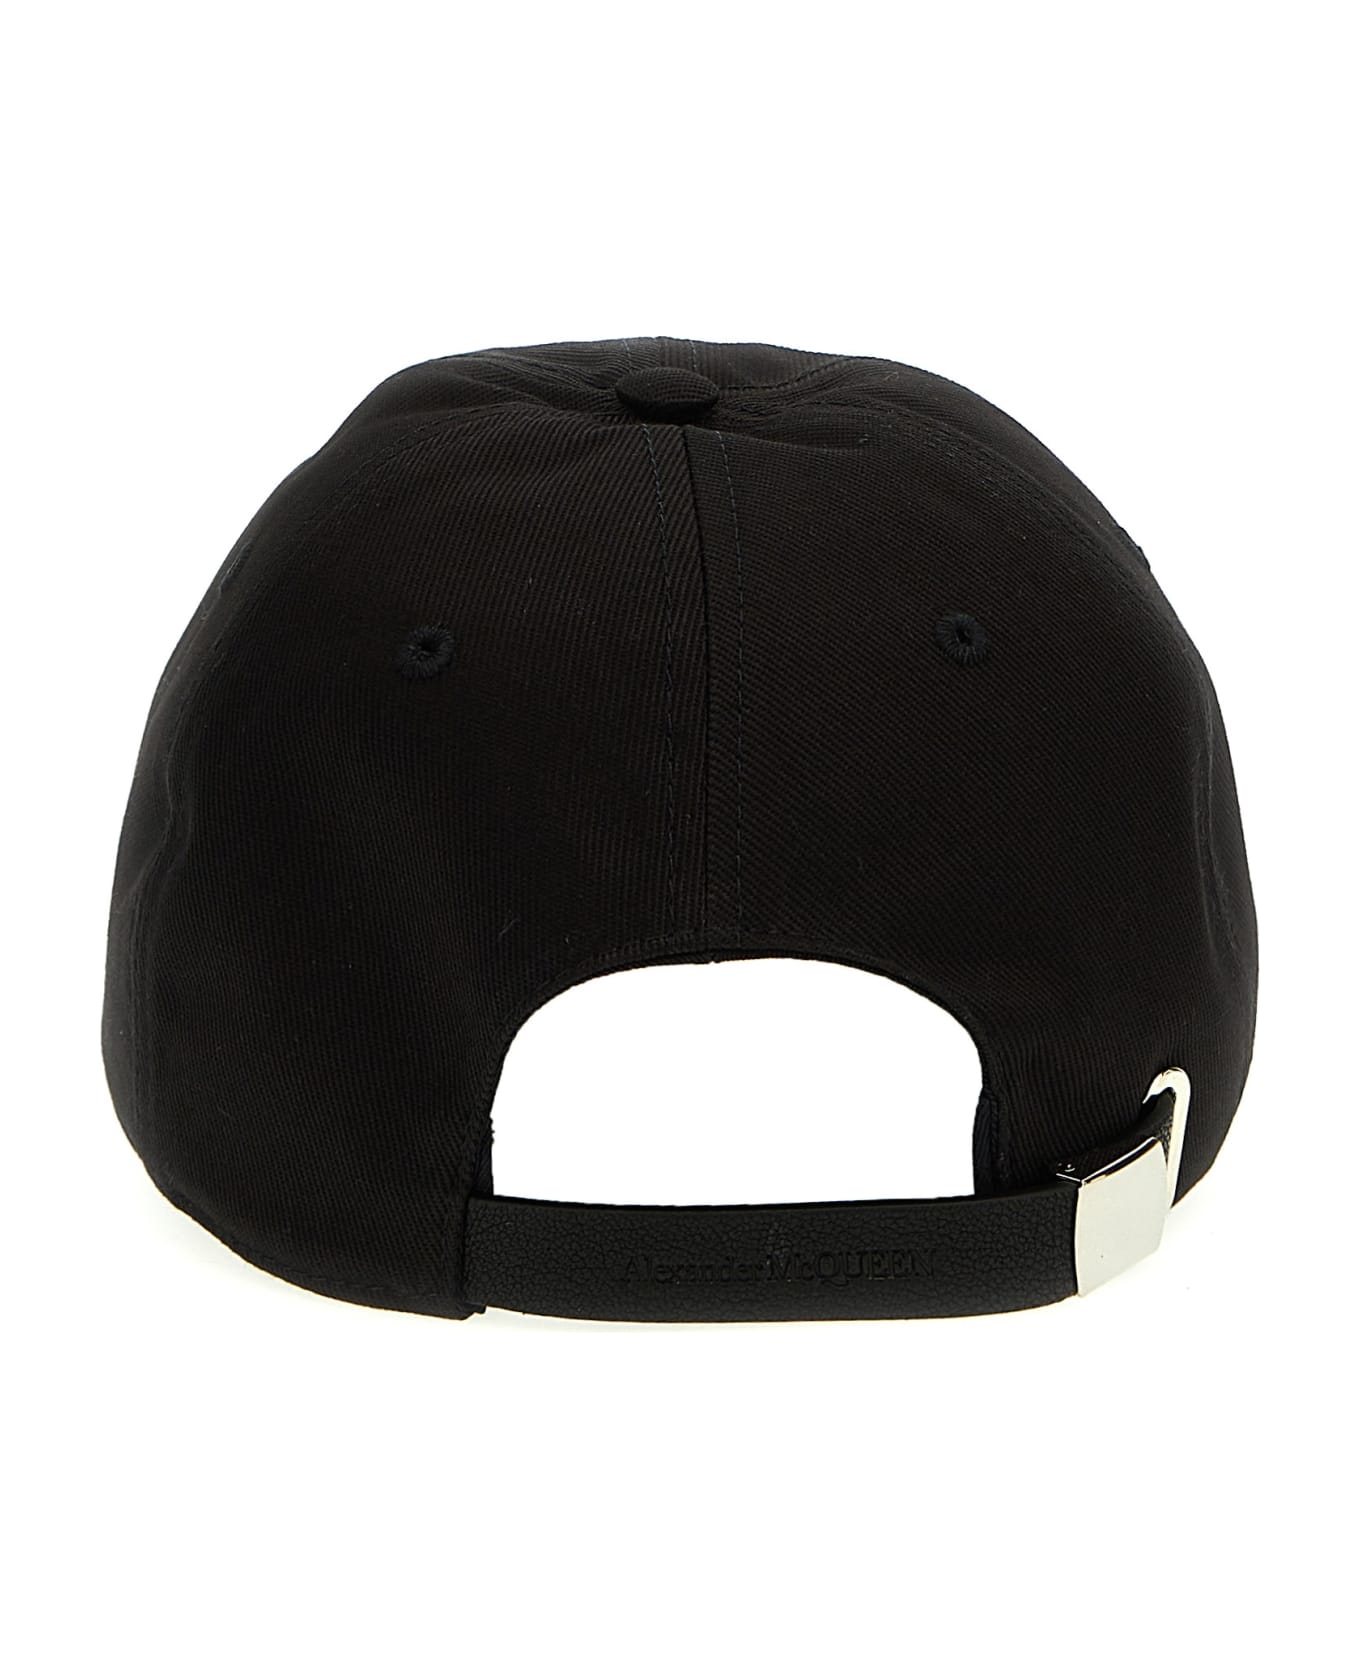 Alexander McQueen Baseball Hat - Black Khaki 帽子